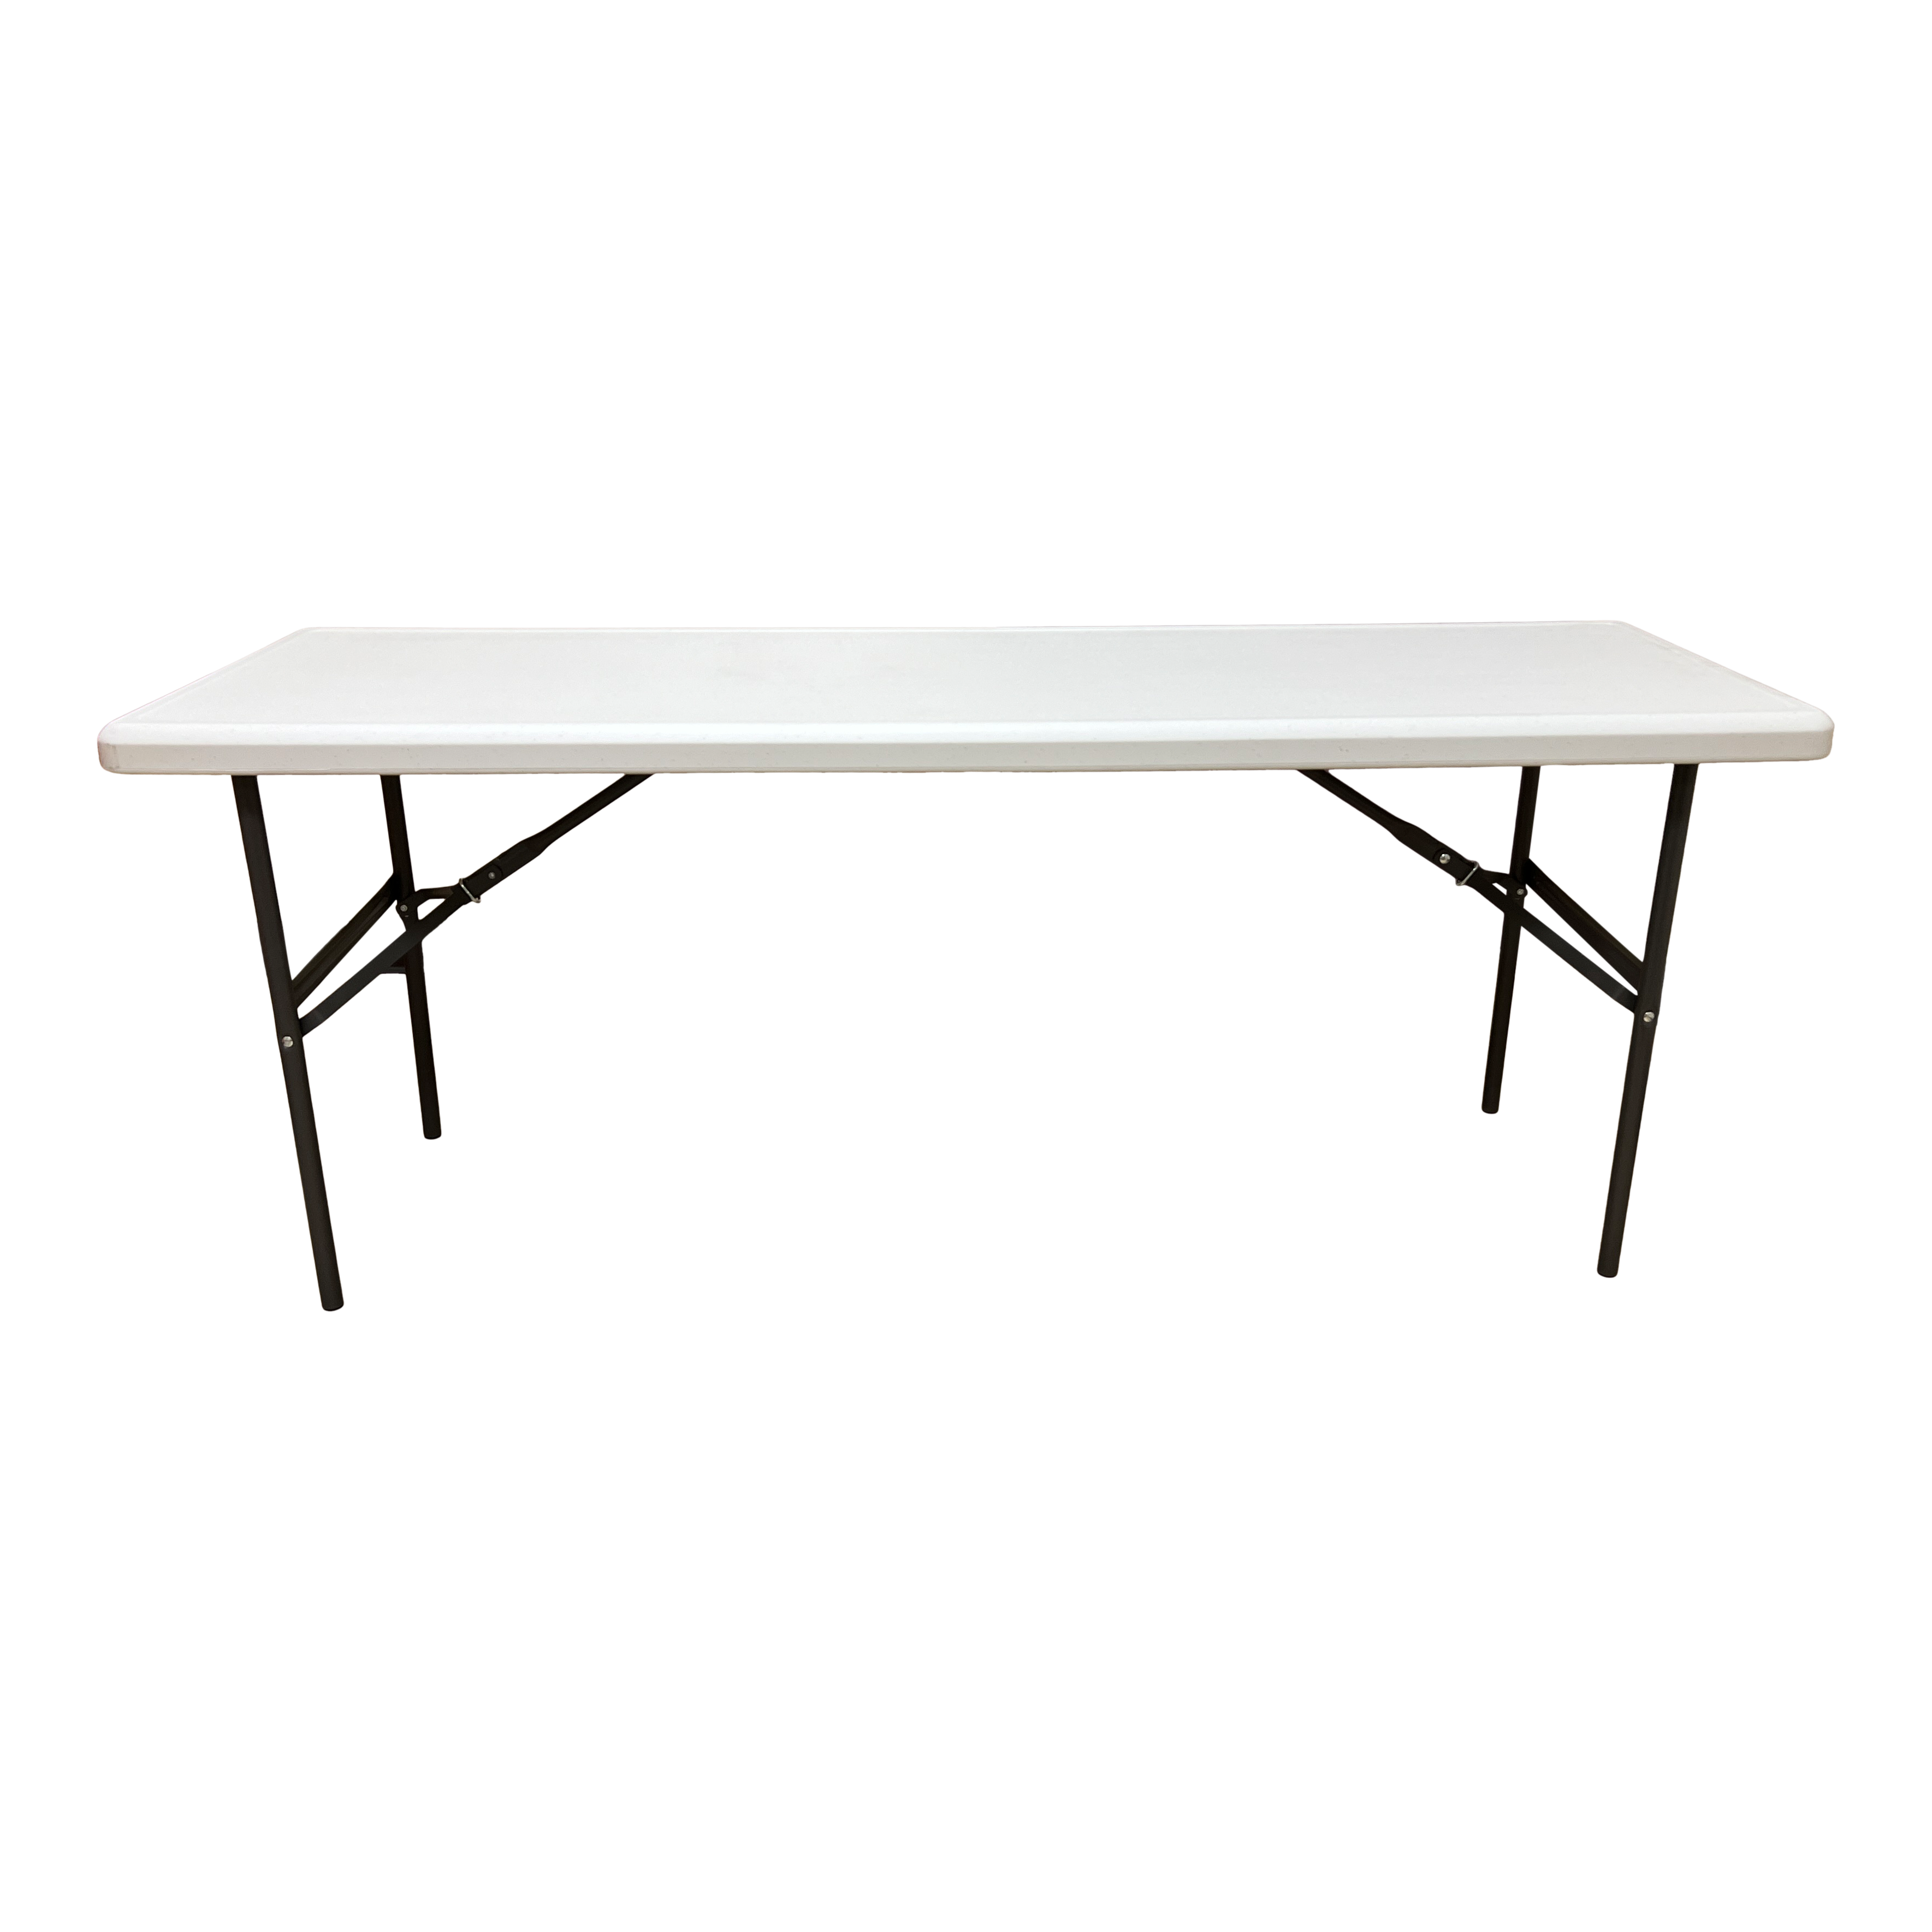 A platinum six-foot folding table.